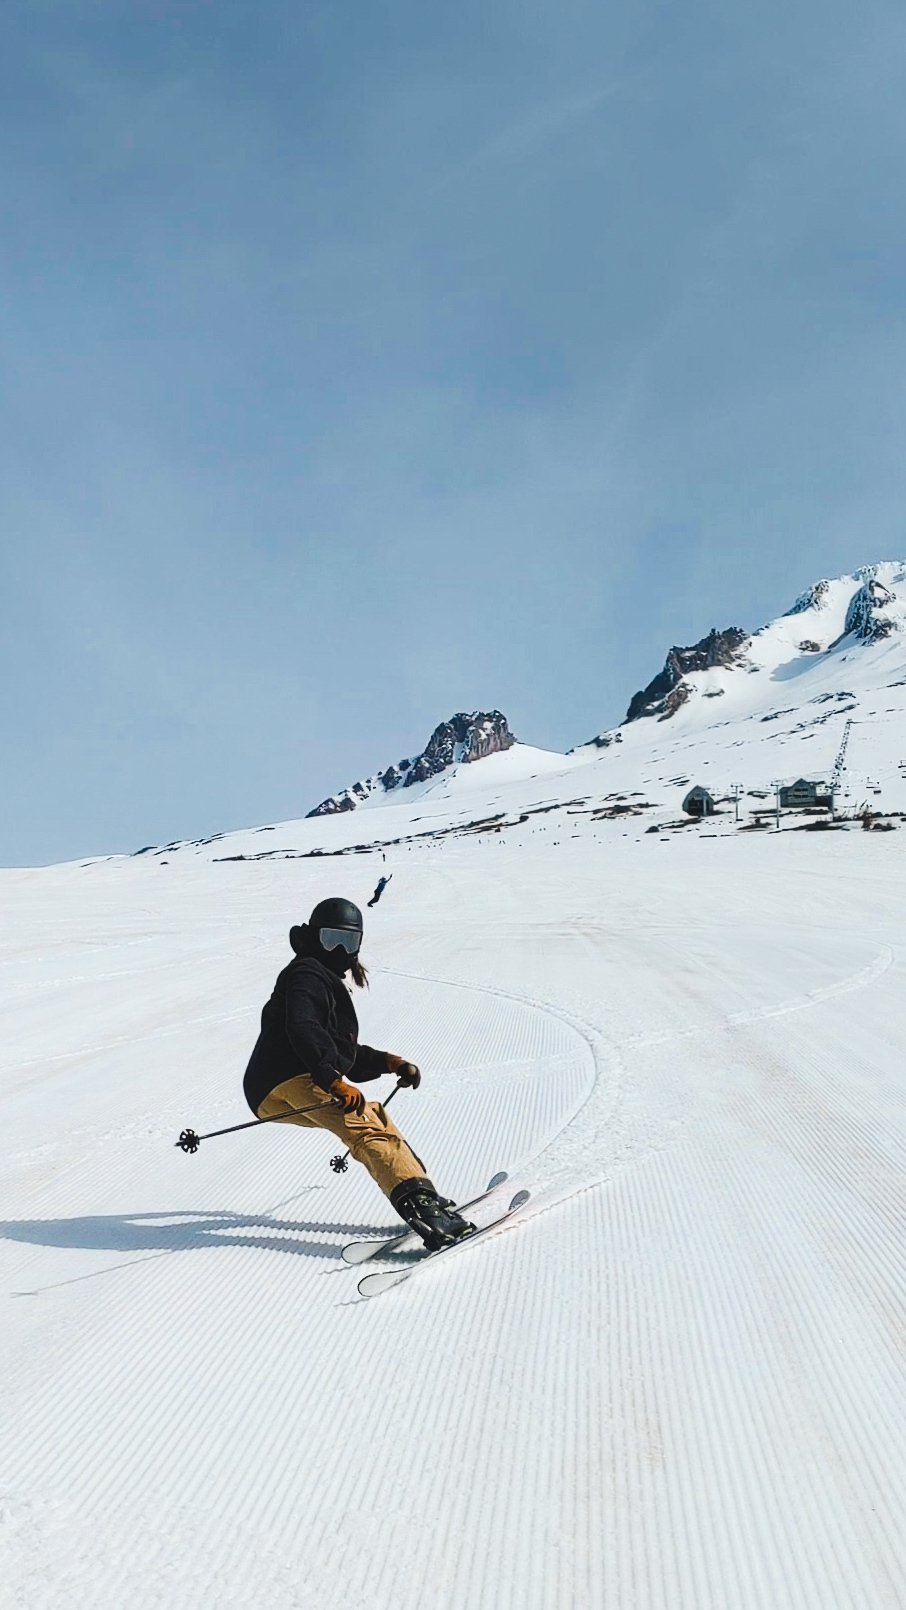 Skiing backwards